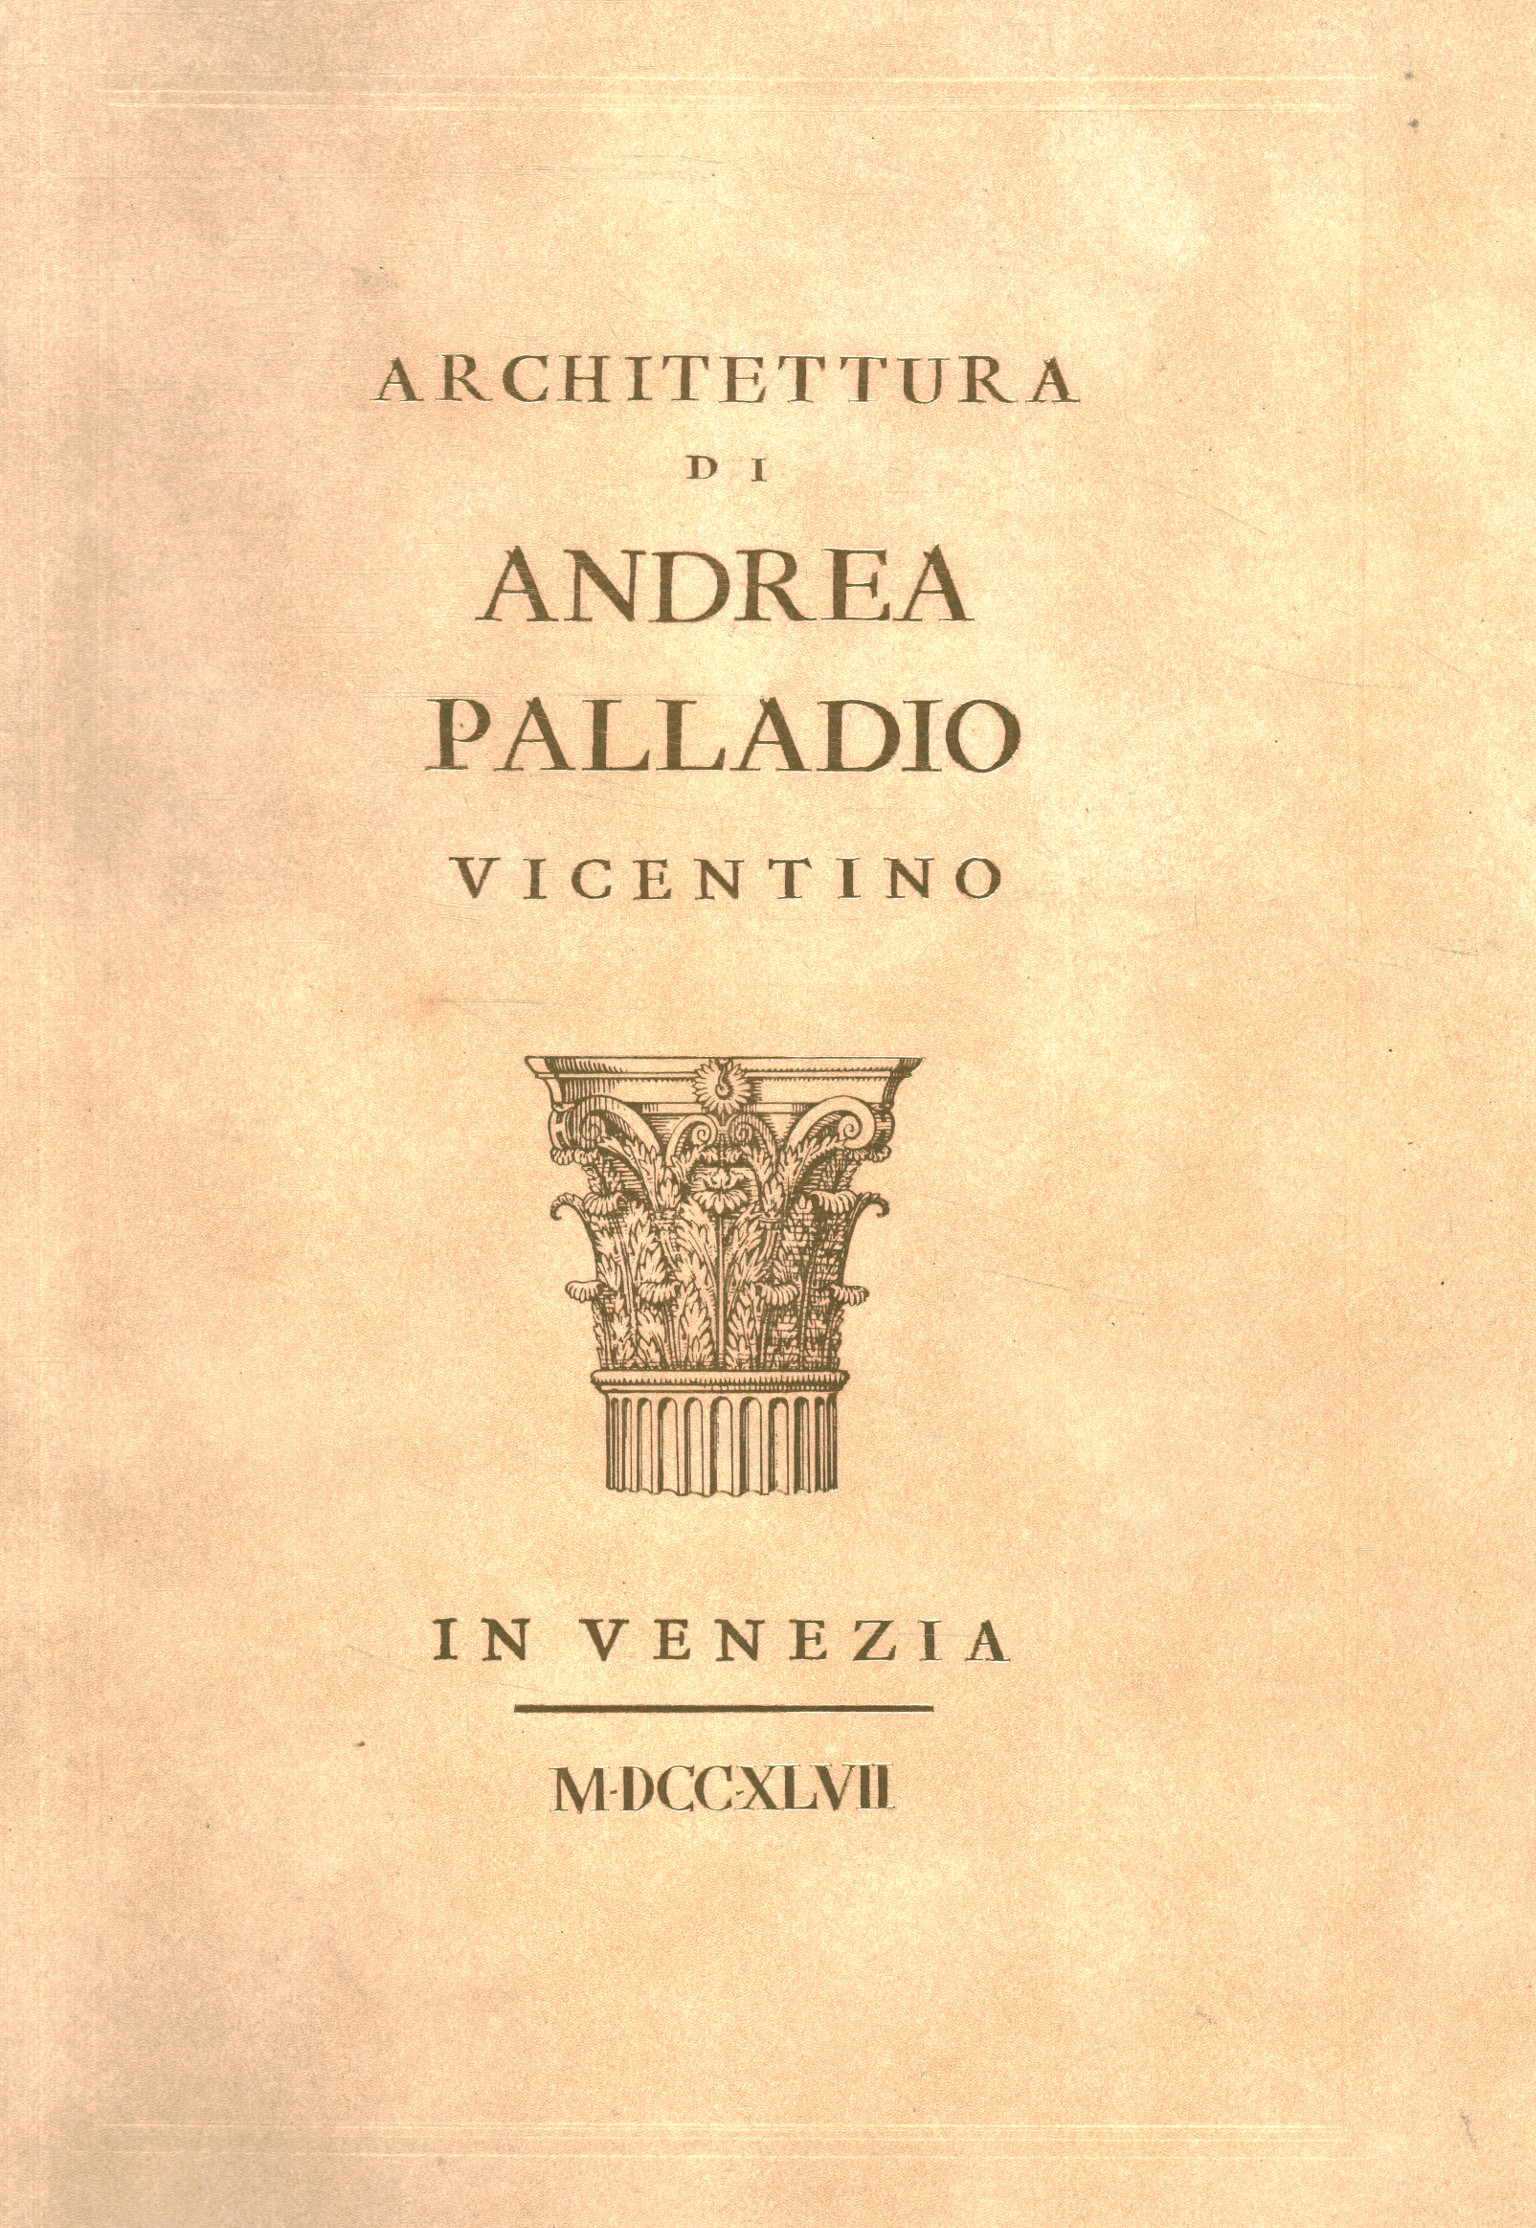 Architecture of Andrea Palladio from Vicenza%,Architecture of Andrea Palladio from Vicenza%,Architecture of Andrea Palladio from Vicenza%